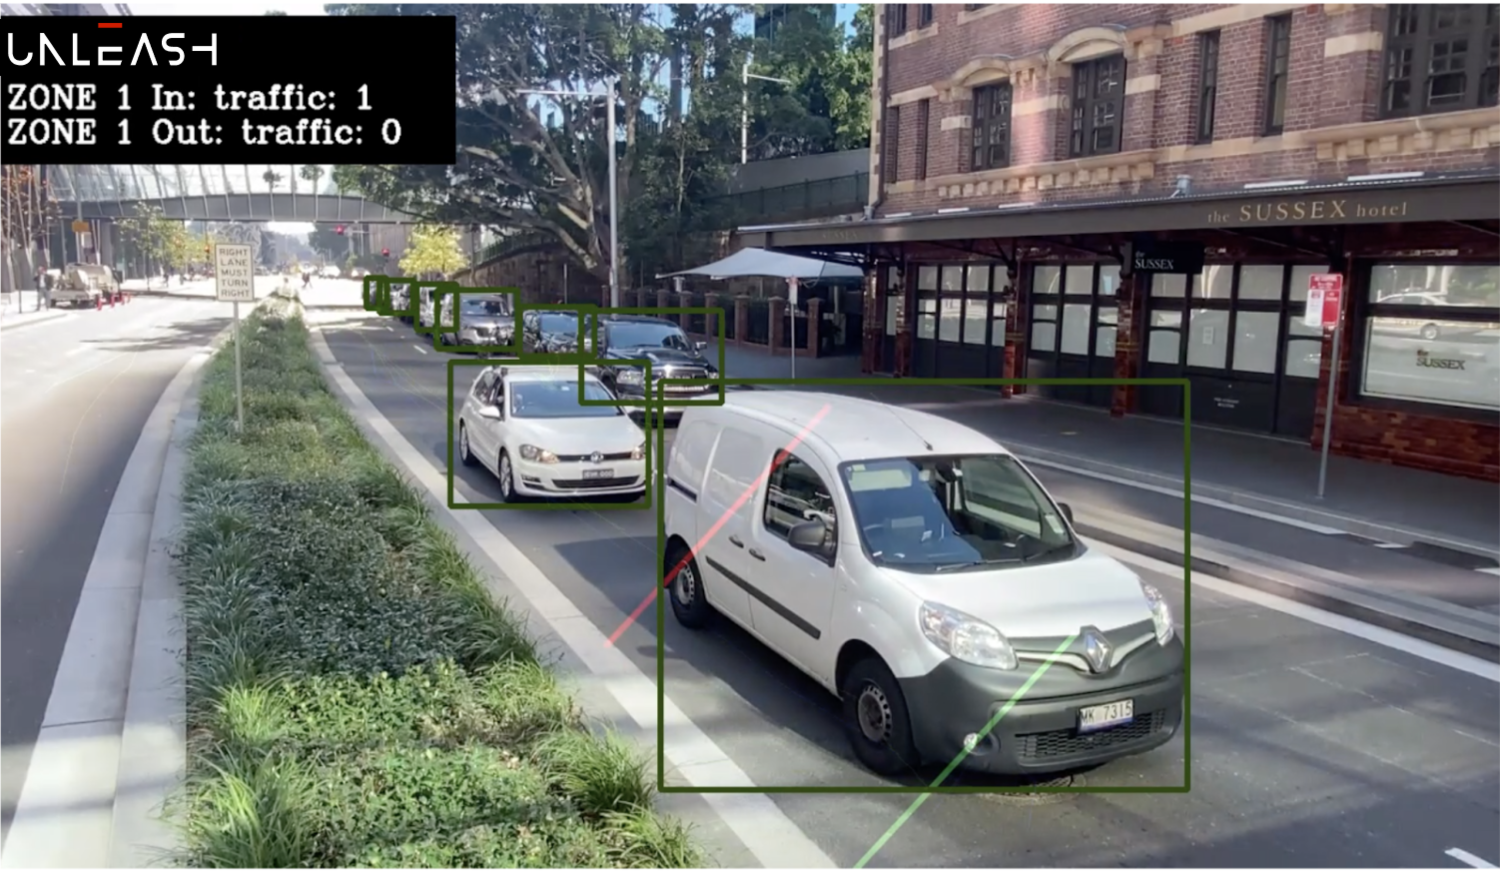 Vehicle monitoring and pedestrian analysis